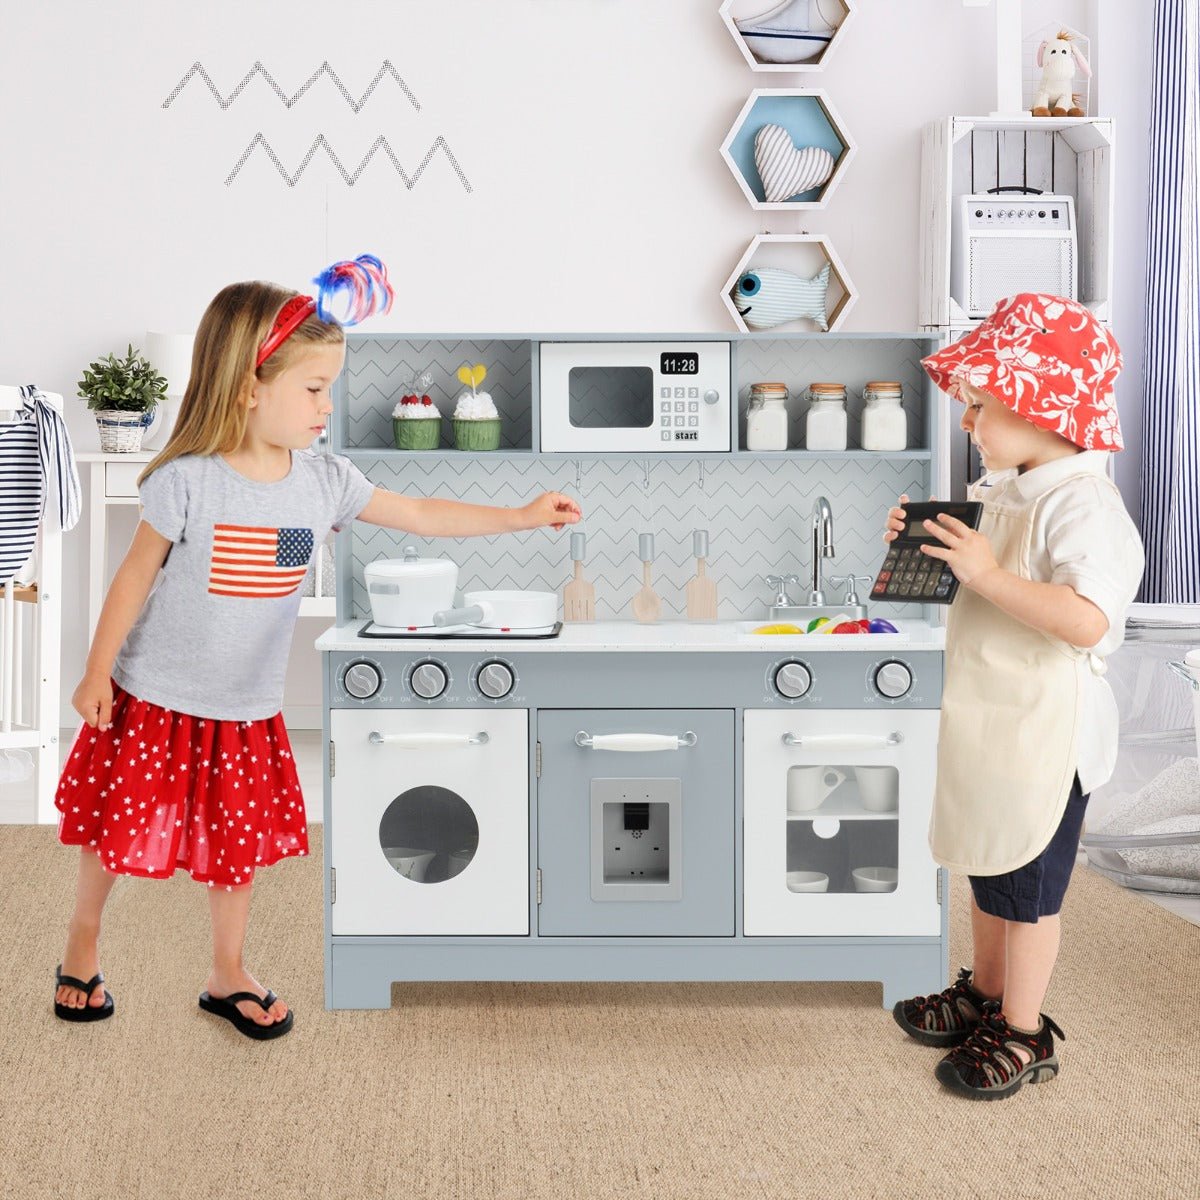 Imaginative Cooking: Kids Wooden Pretend Kitchen Playset with Accessories